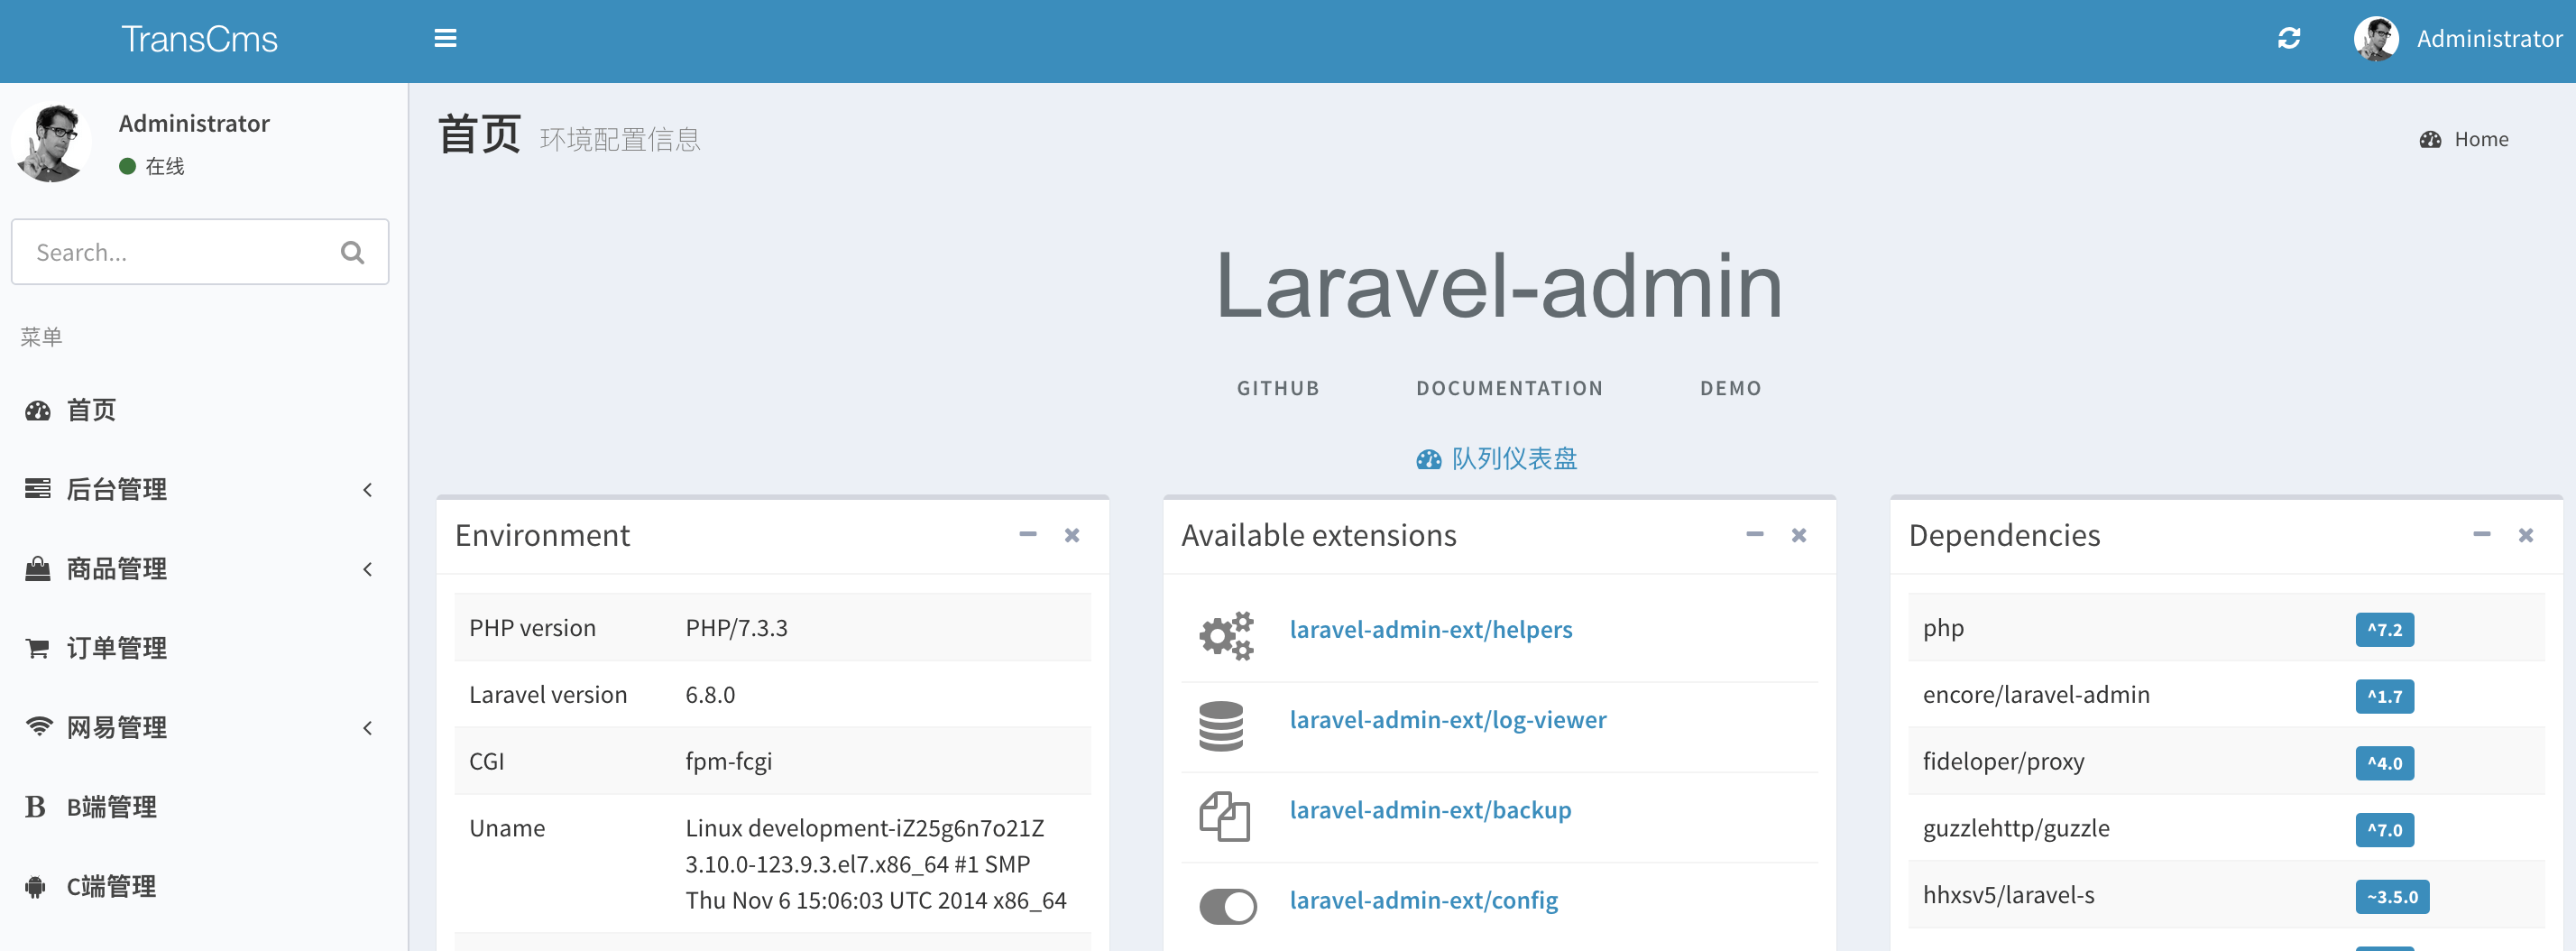 Laravel-admin 商品订单中转后台